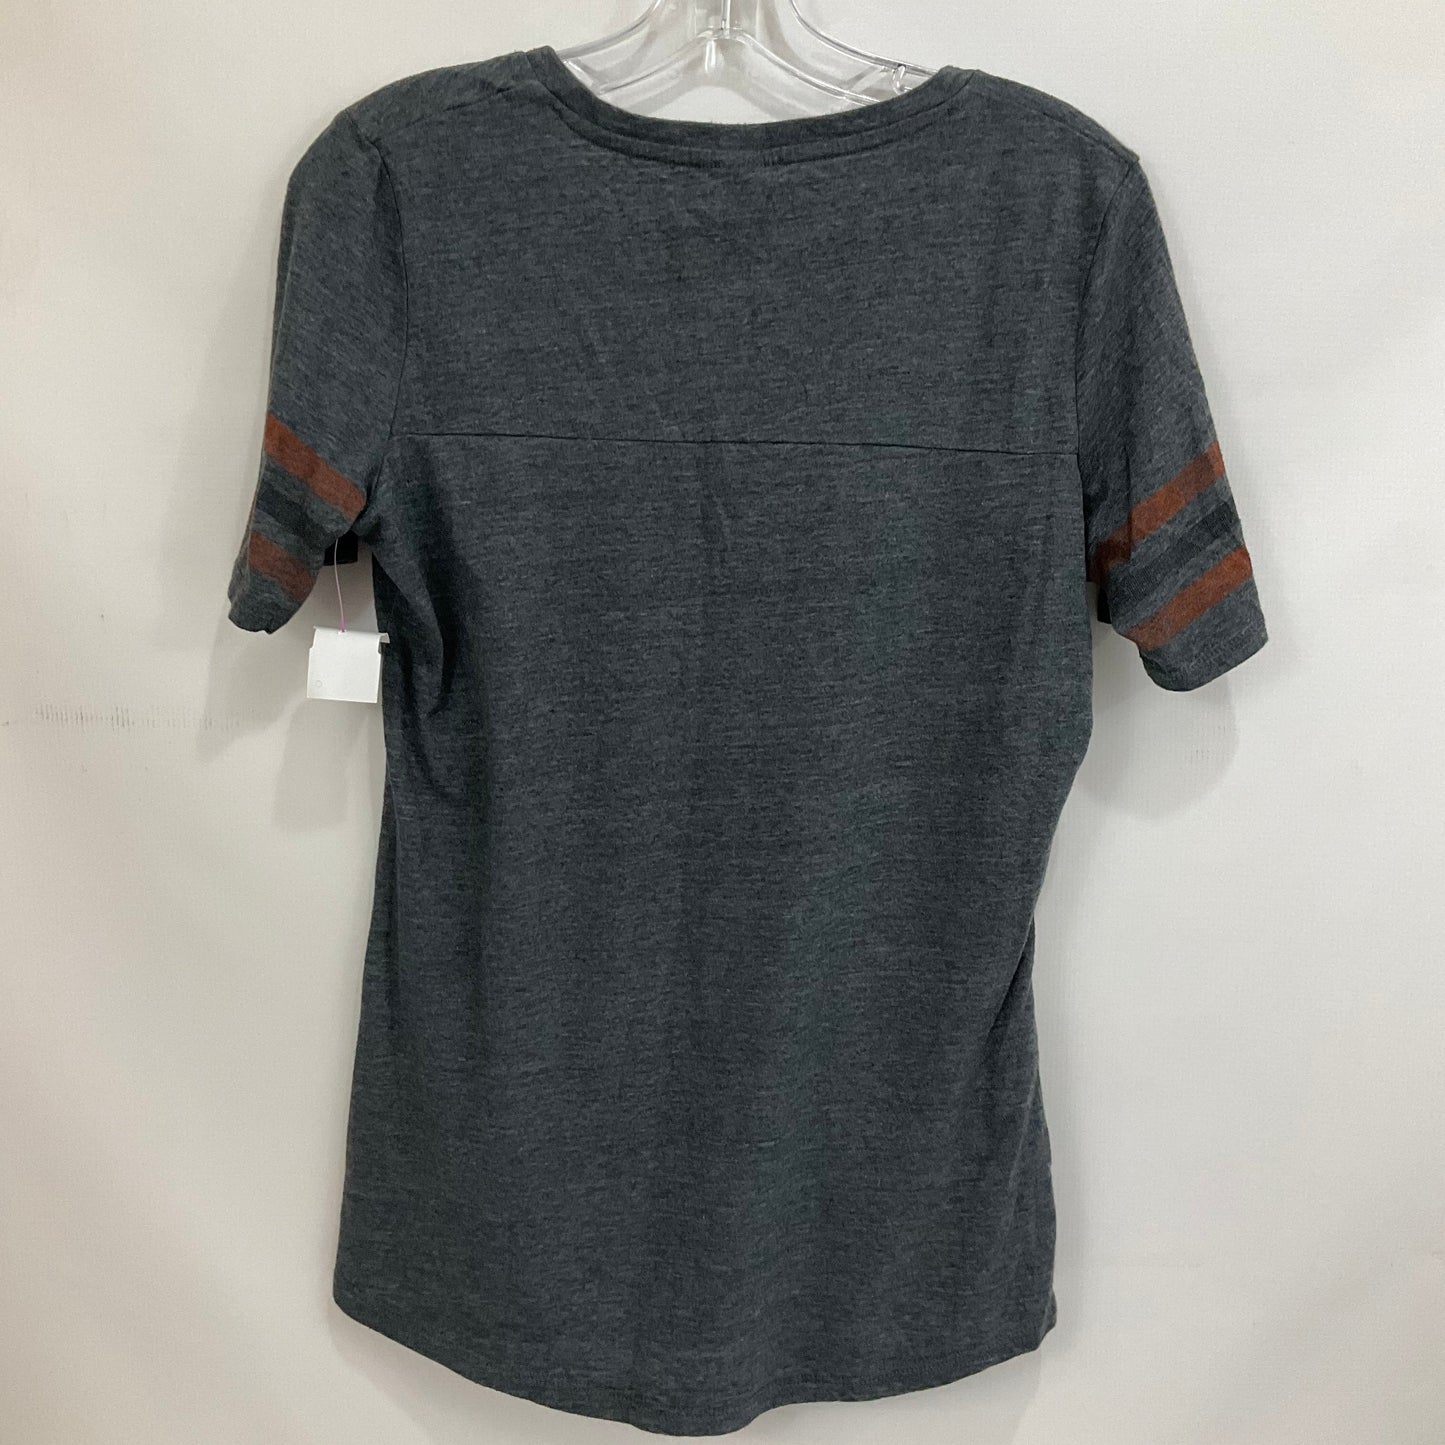 Grey & Orange Athletic Top Short Sleeve Nfl, Size M